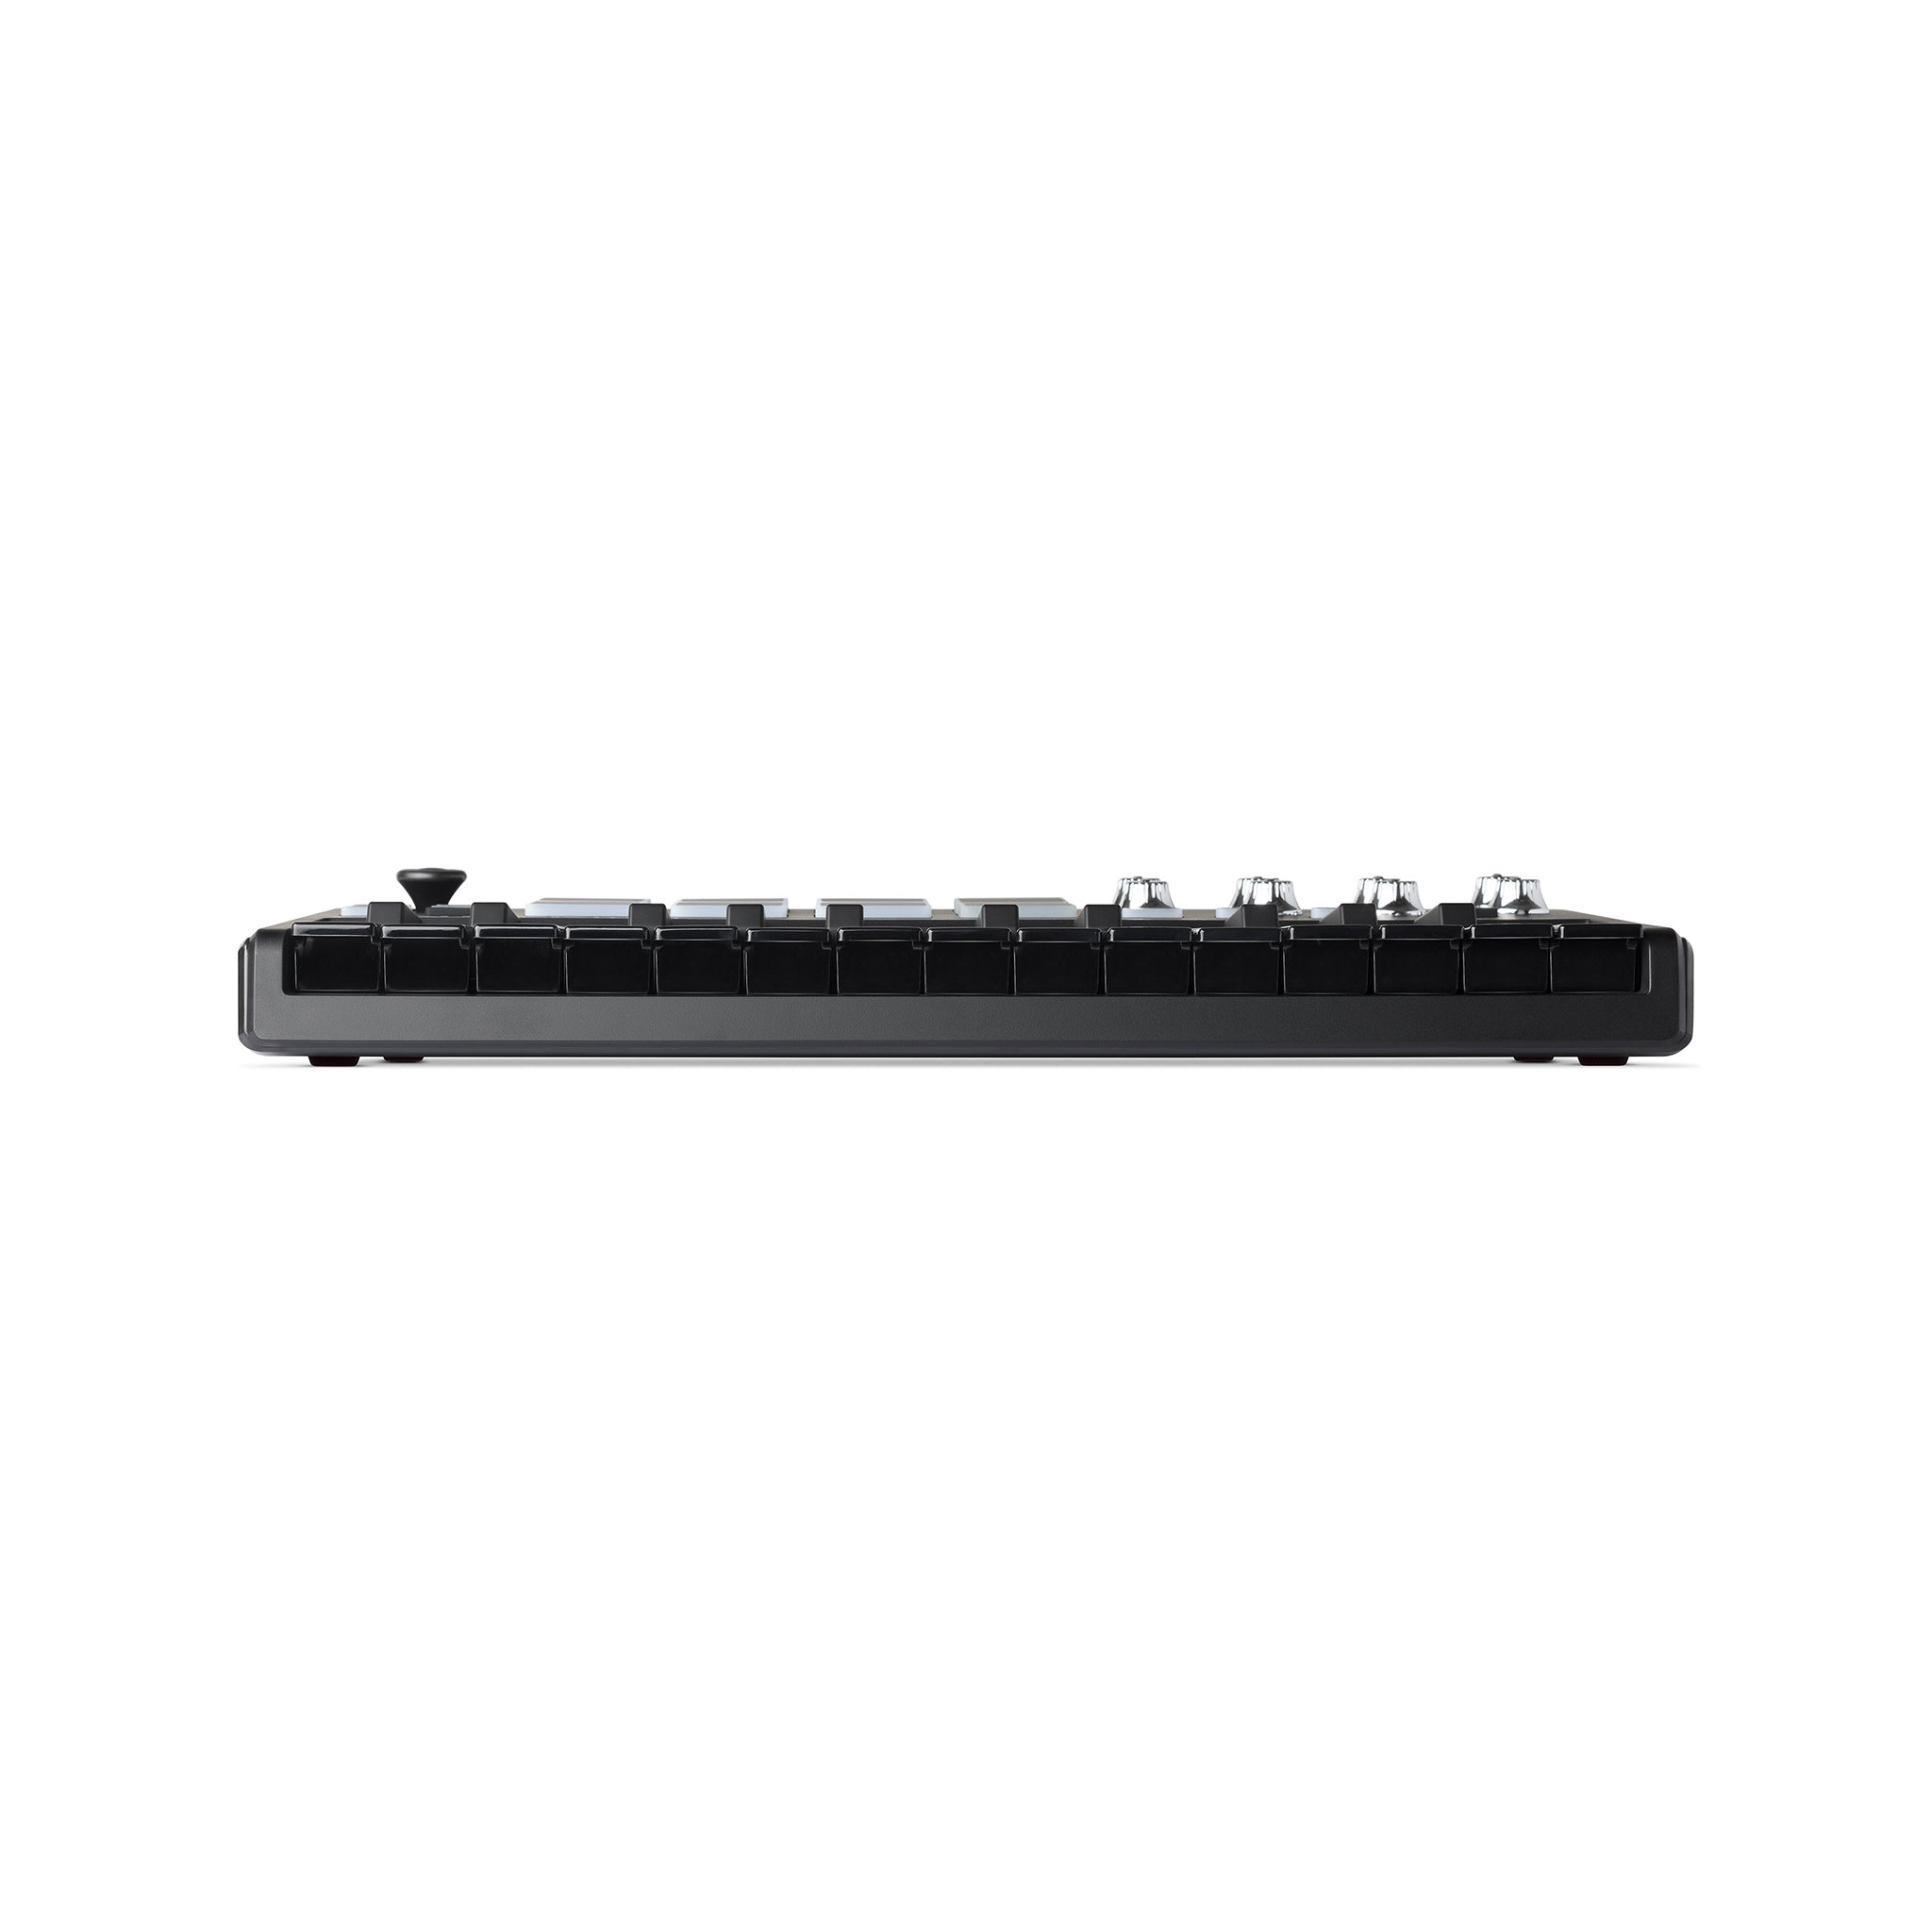 Akai MPK Mini Mk2 Compact Keyboard Controller, Black Zoso Music